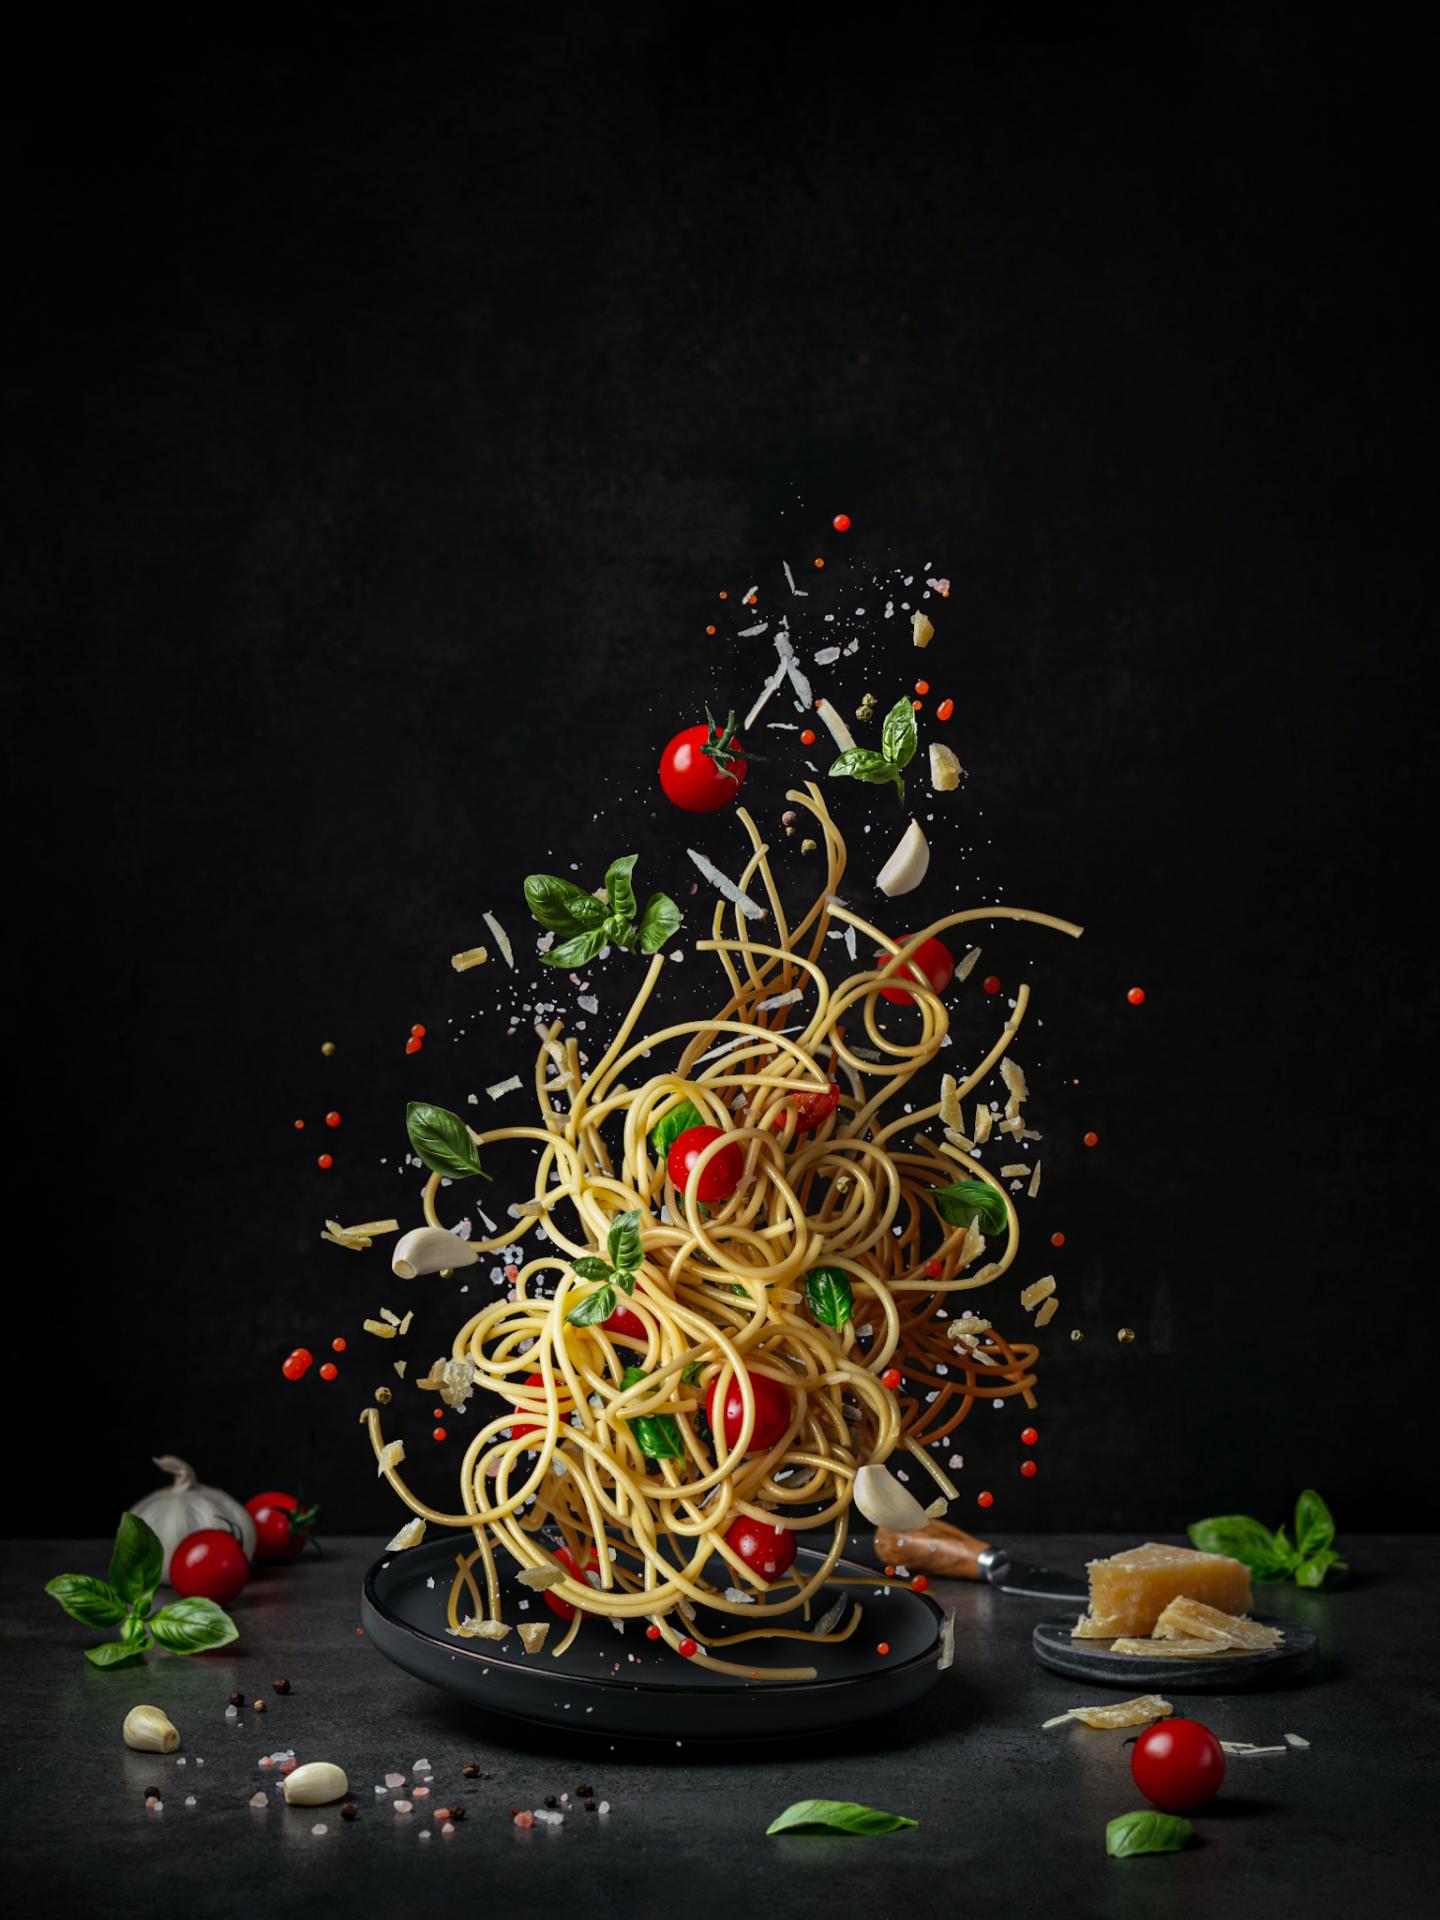 New York Photography Awards Winner - Flying spaghetti